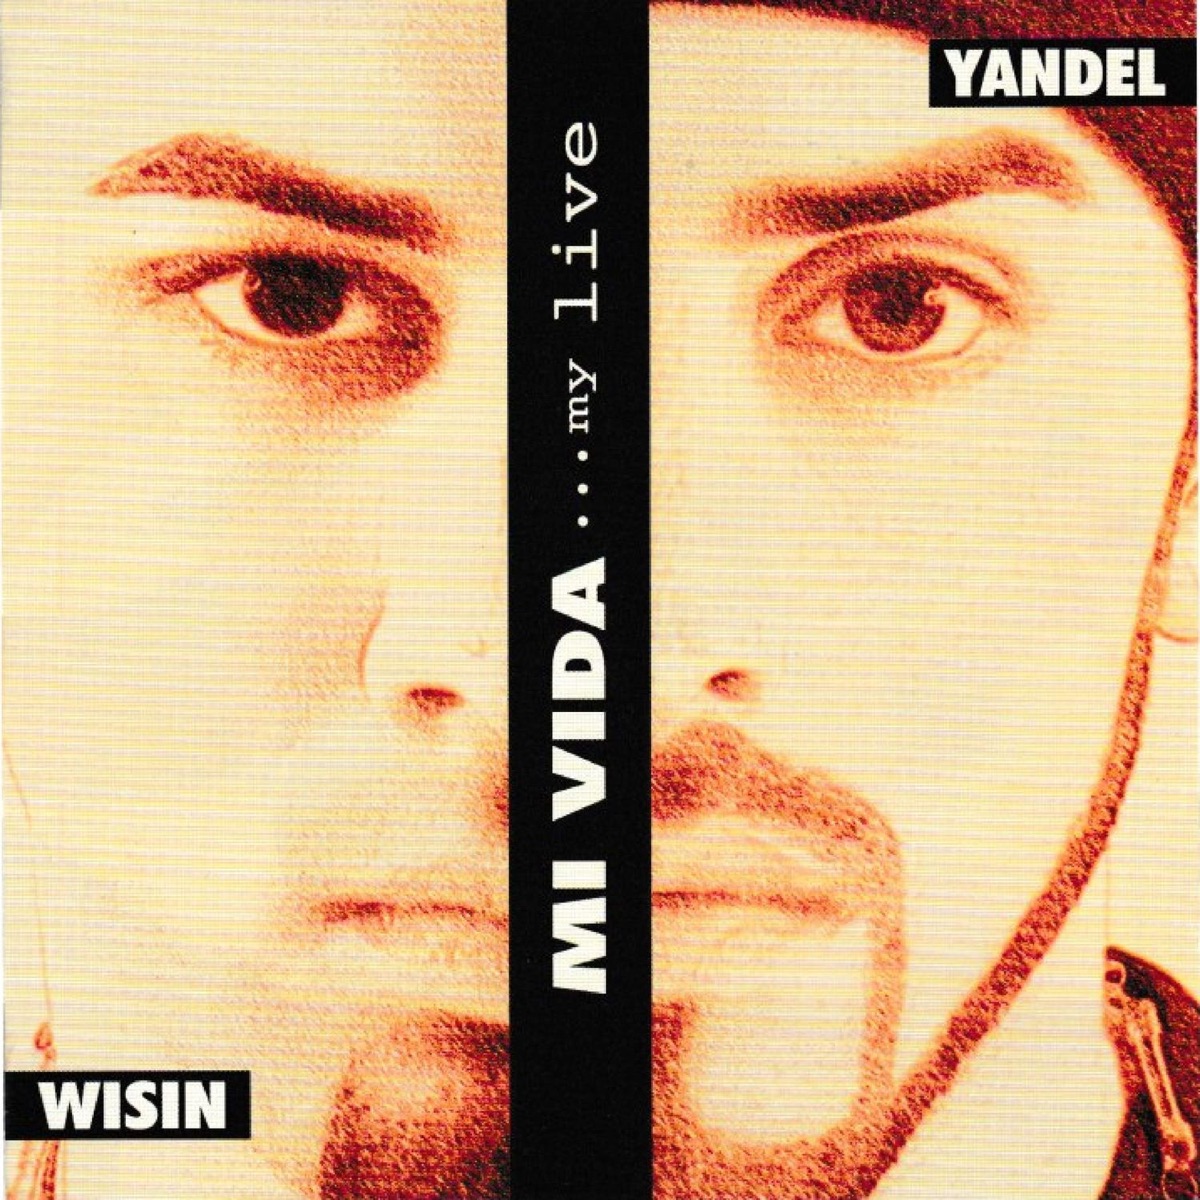 La Revolución (Deluxe) by Wisin & Yandel on Apple Music